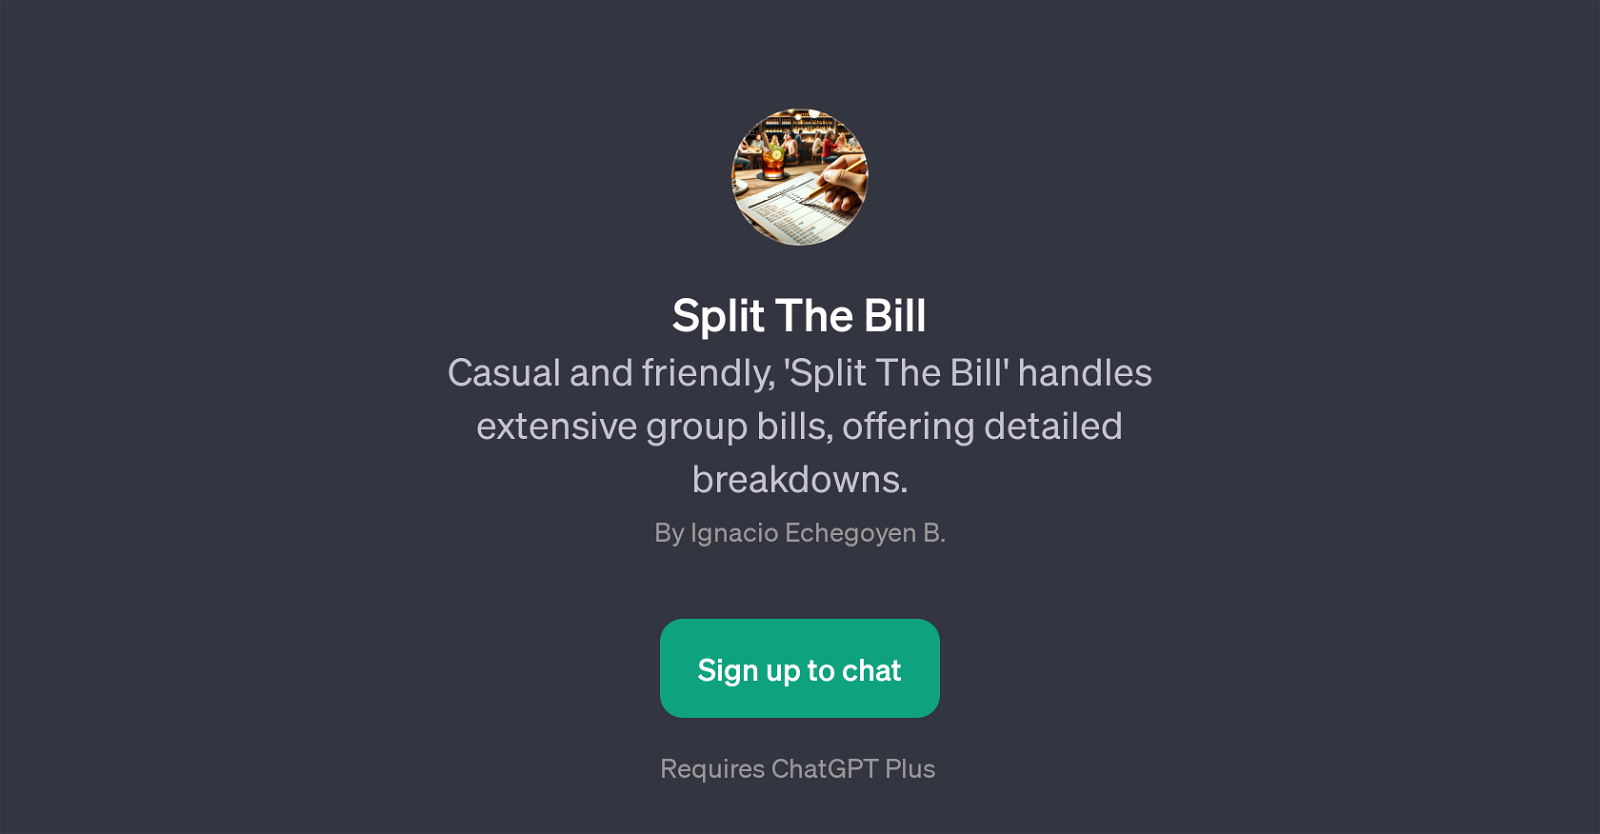 Split The Bill website